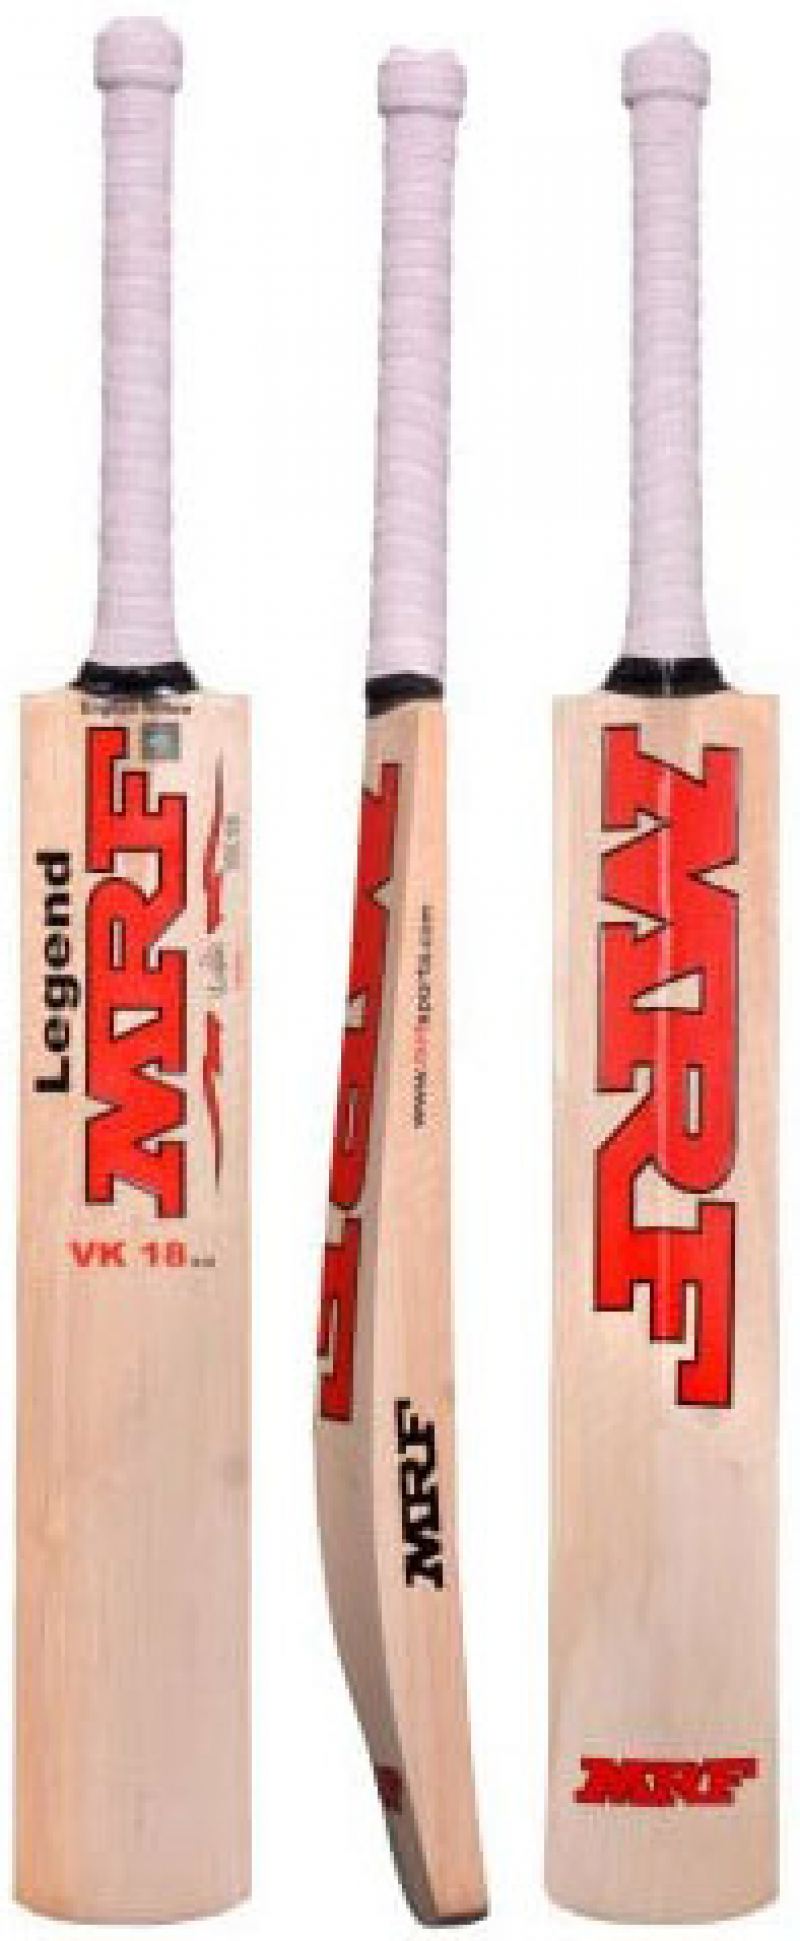 MRF Legend VK 18 2.0 Cricket Bat